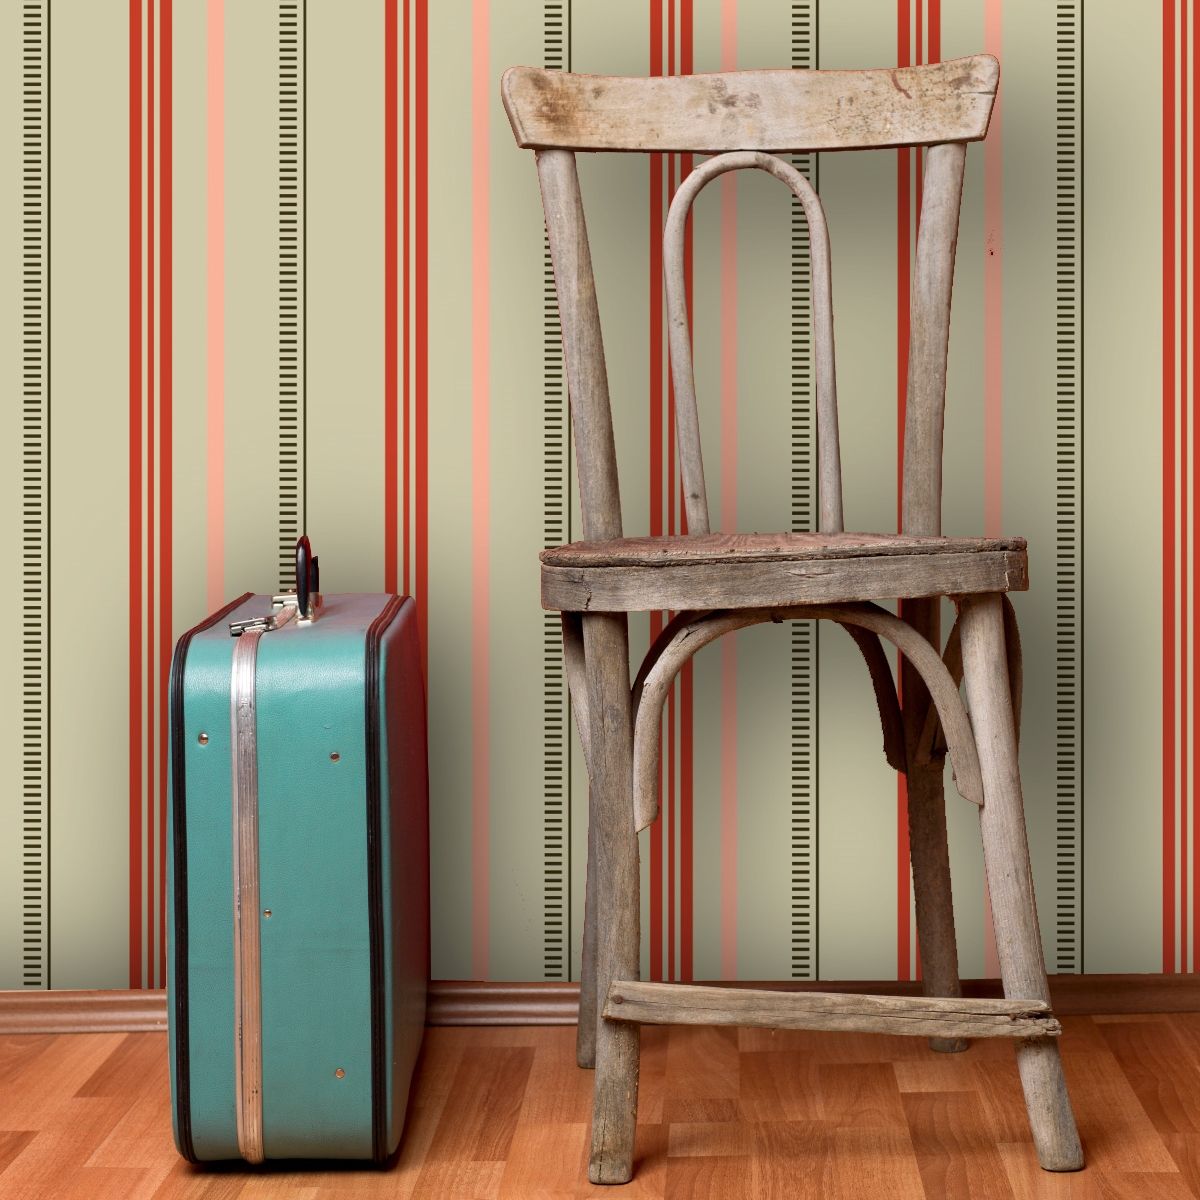 https://images.squarespace-cdn.com/content/v1/55c91156e4b05f3b53ead571/1448394849270-IX017G9H9R9P3V7JTZPL/Suitcase-and-Wood-Chair-LITTLE-STANLEY-buff.jpg